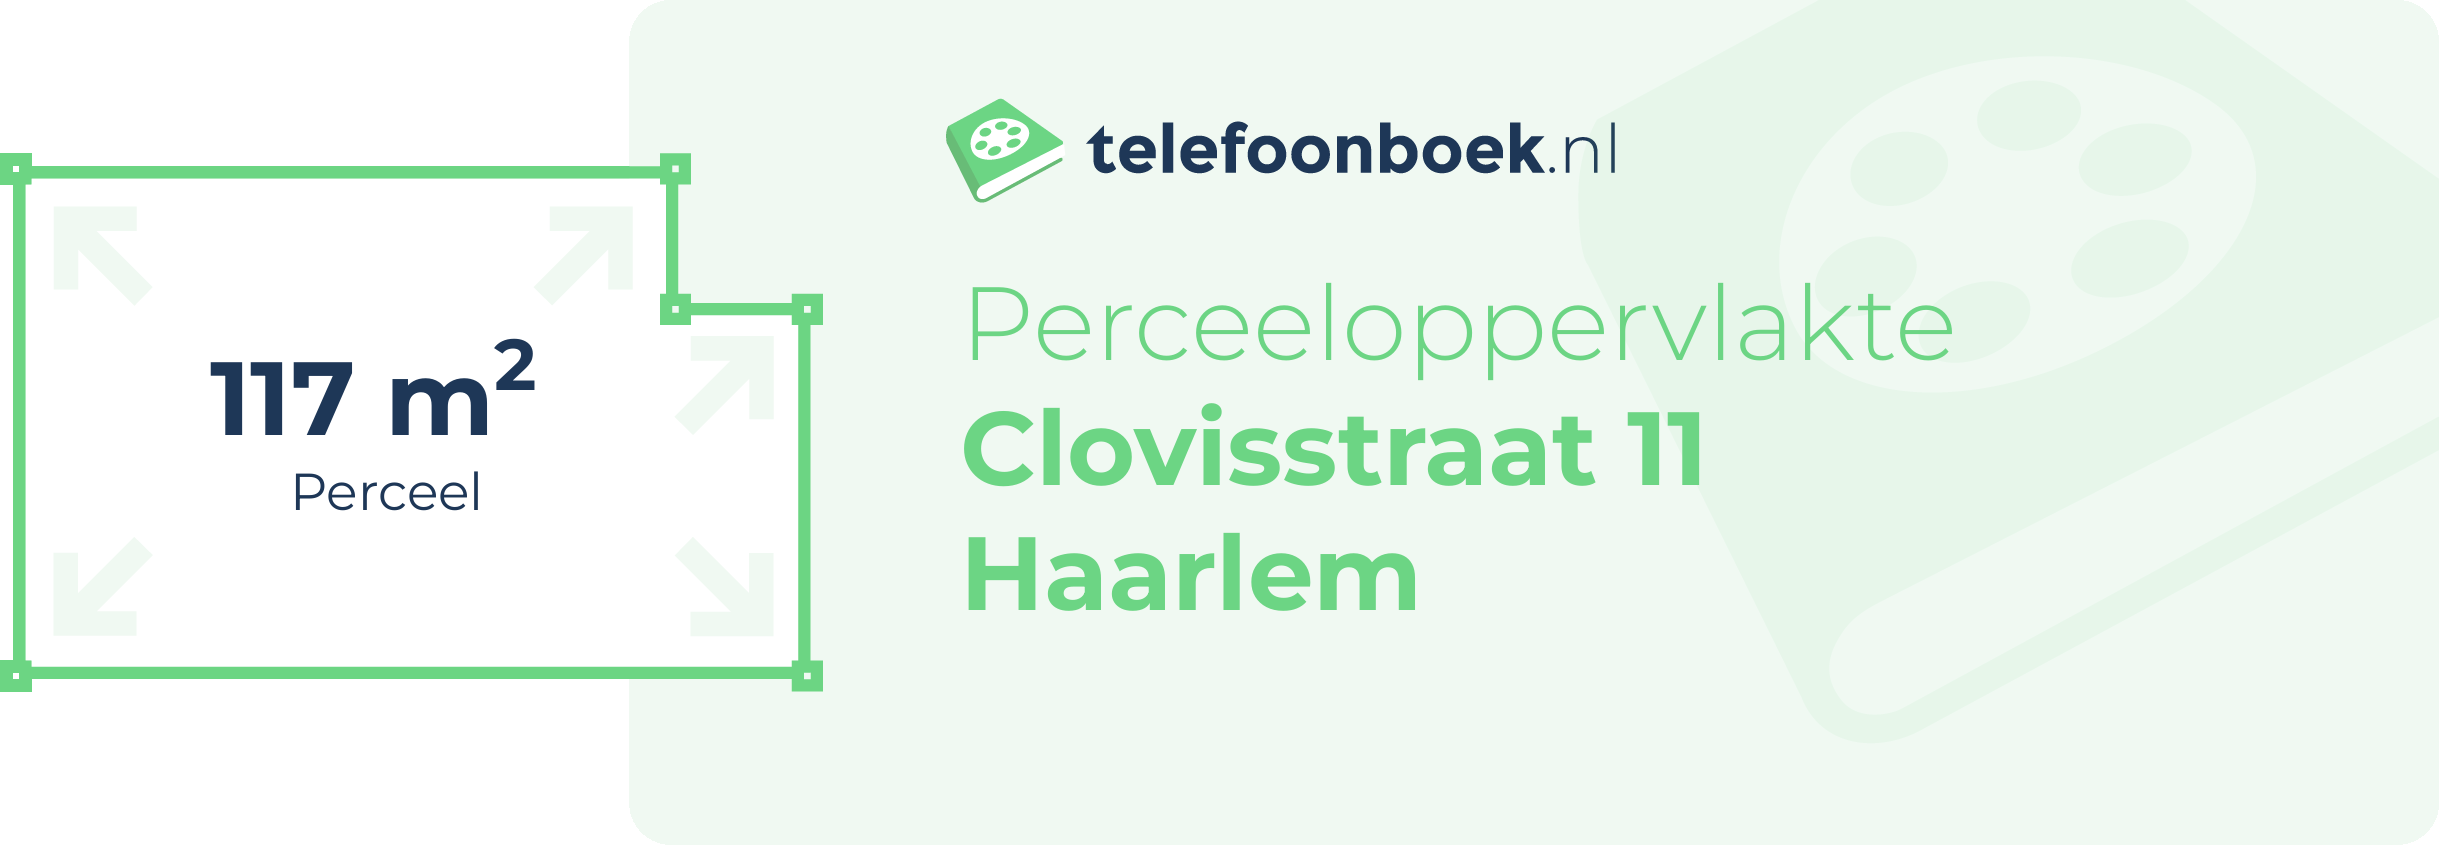 Perceeloppervlakte Clovisstraat 11 Haarlem